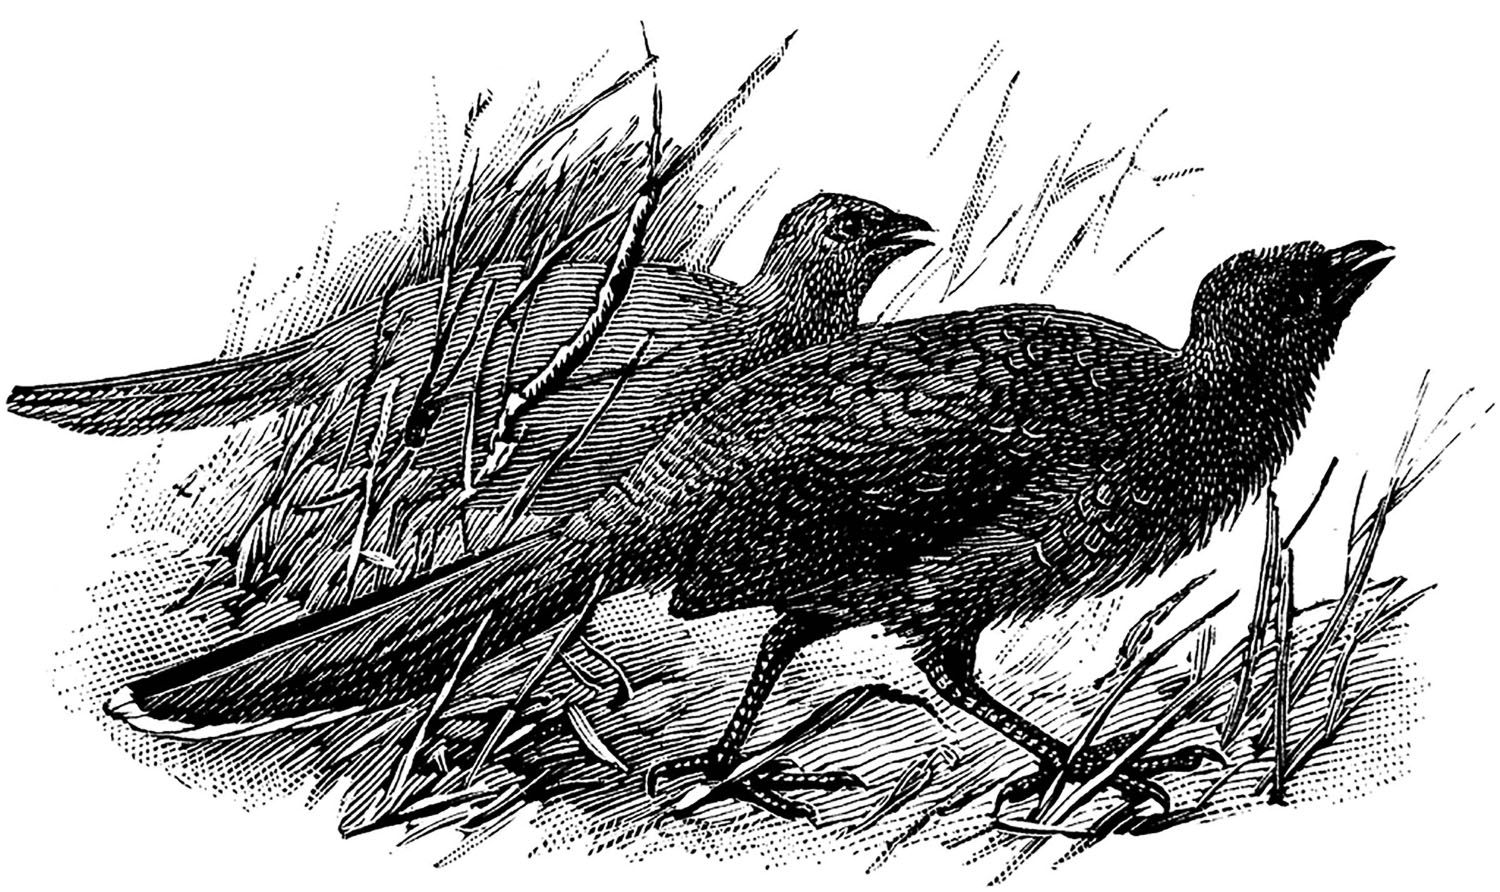 An illustration of two birds walking through brush